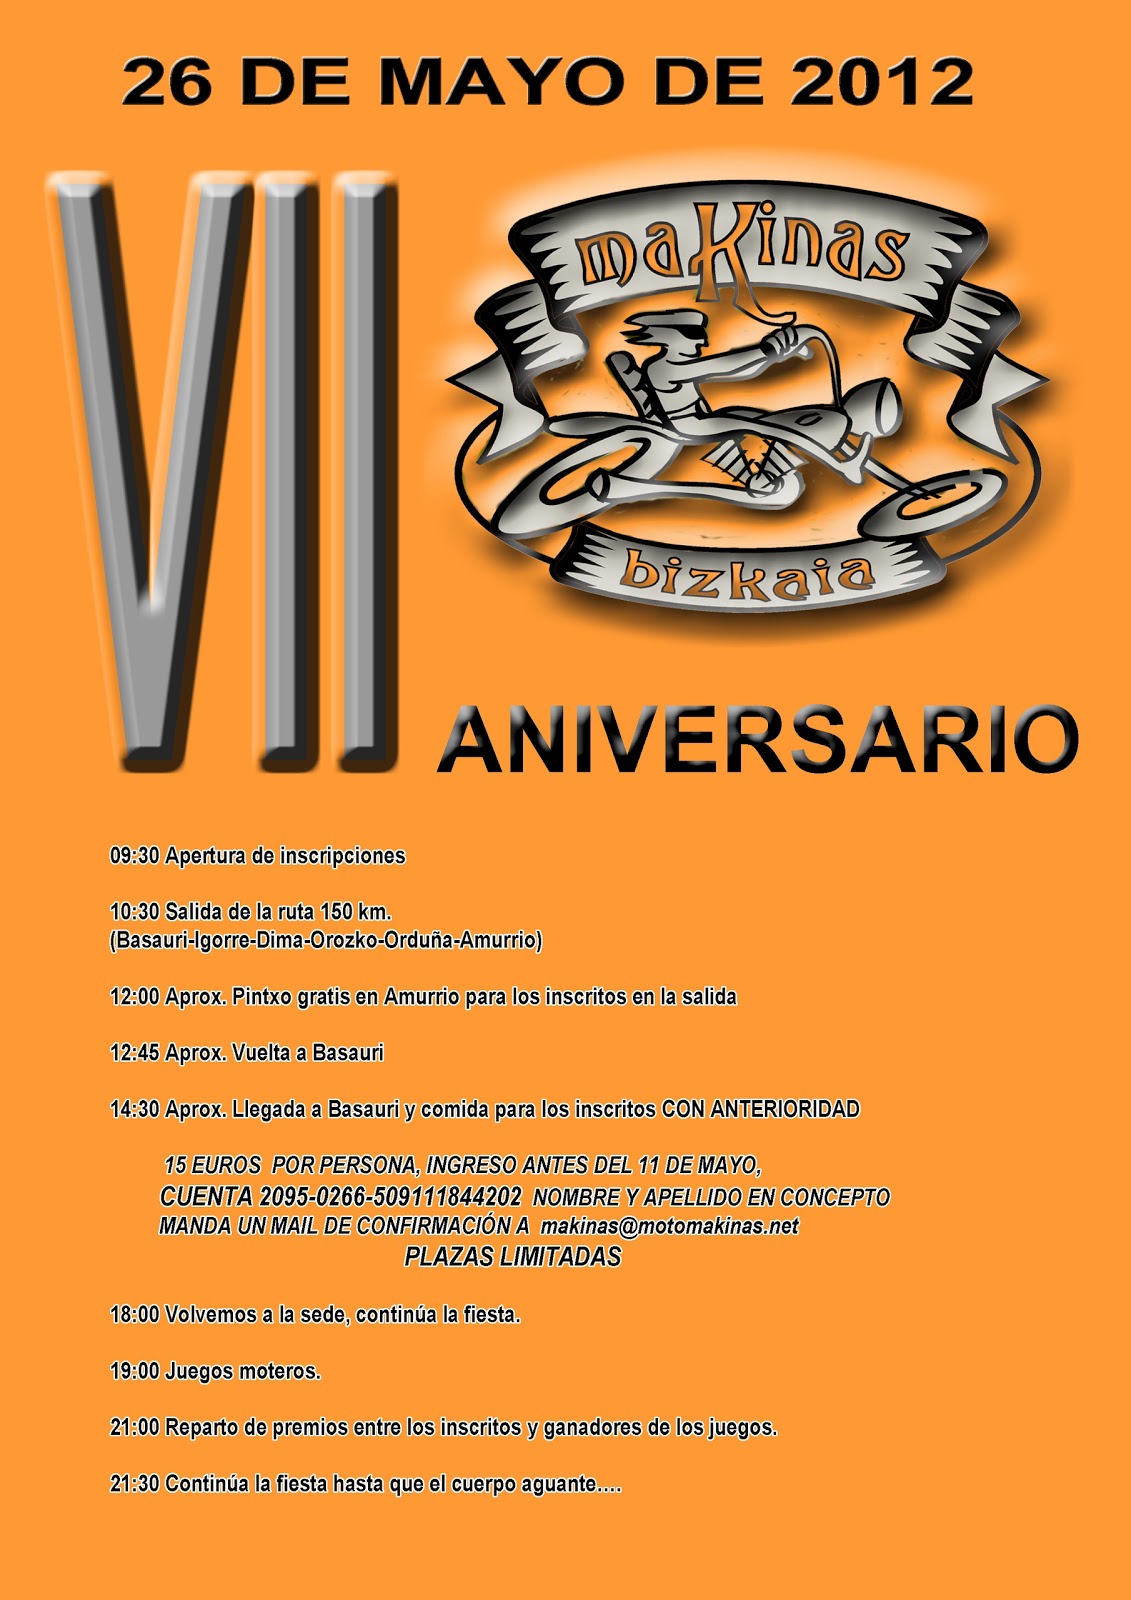 VII ANIVERSARIO MAKINAS 26 DE MAYO 2012 7+ANIVERSARIO